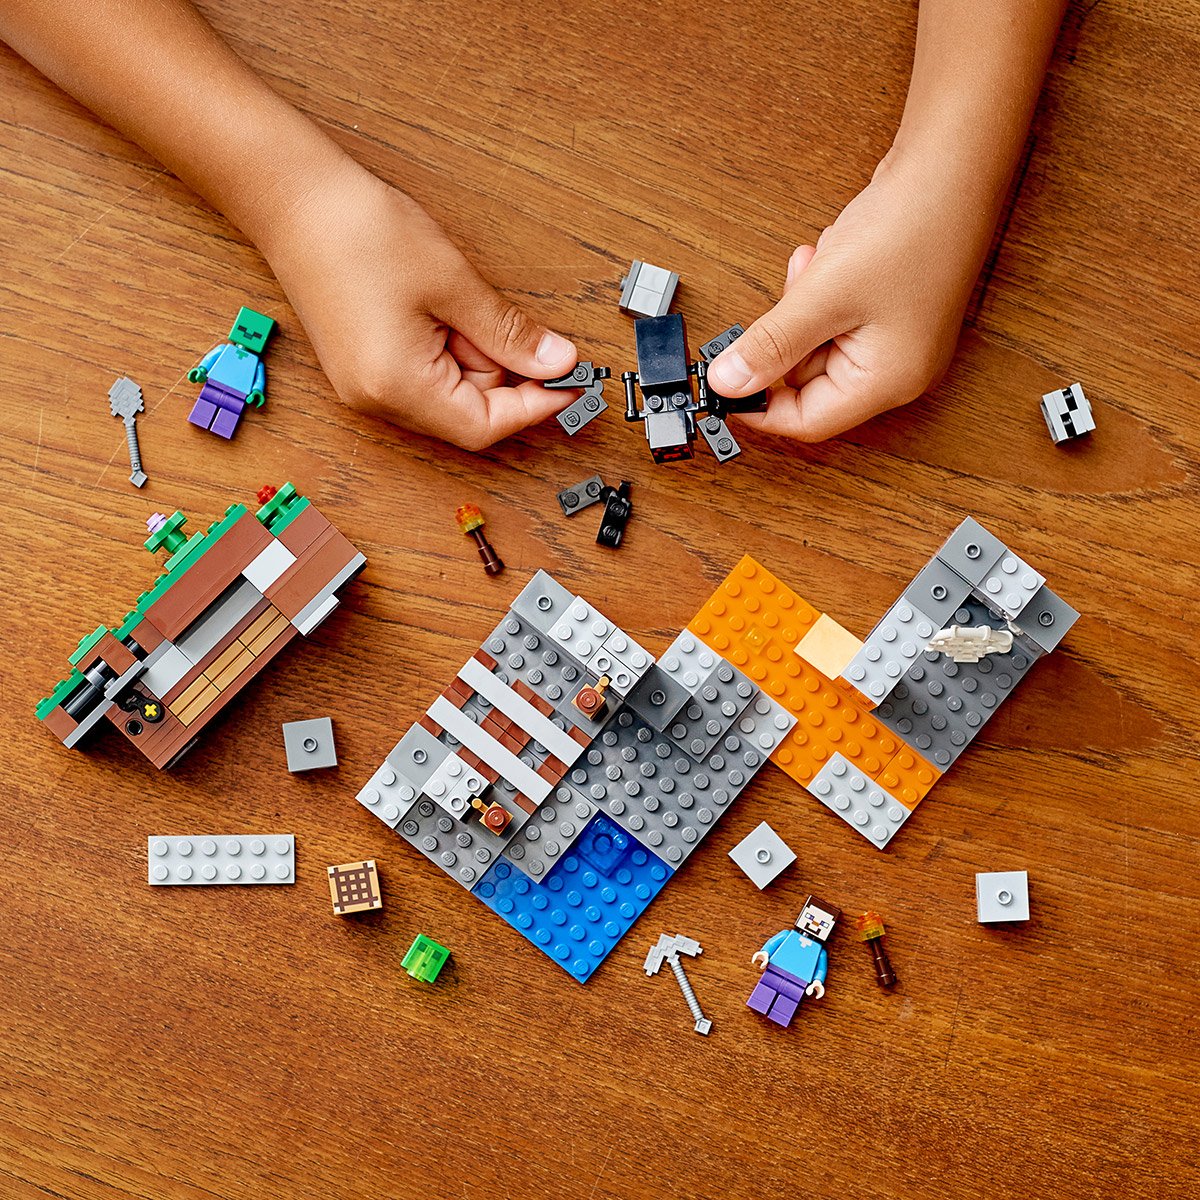 Jeux de construction Lego Minecraft - Abandoned Mine